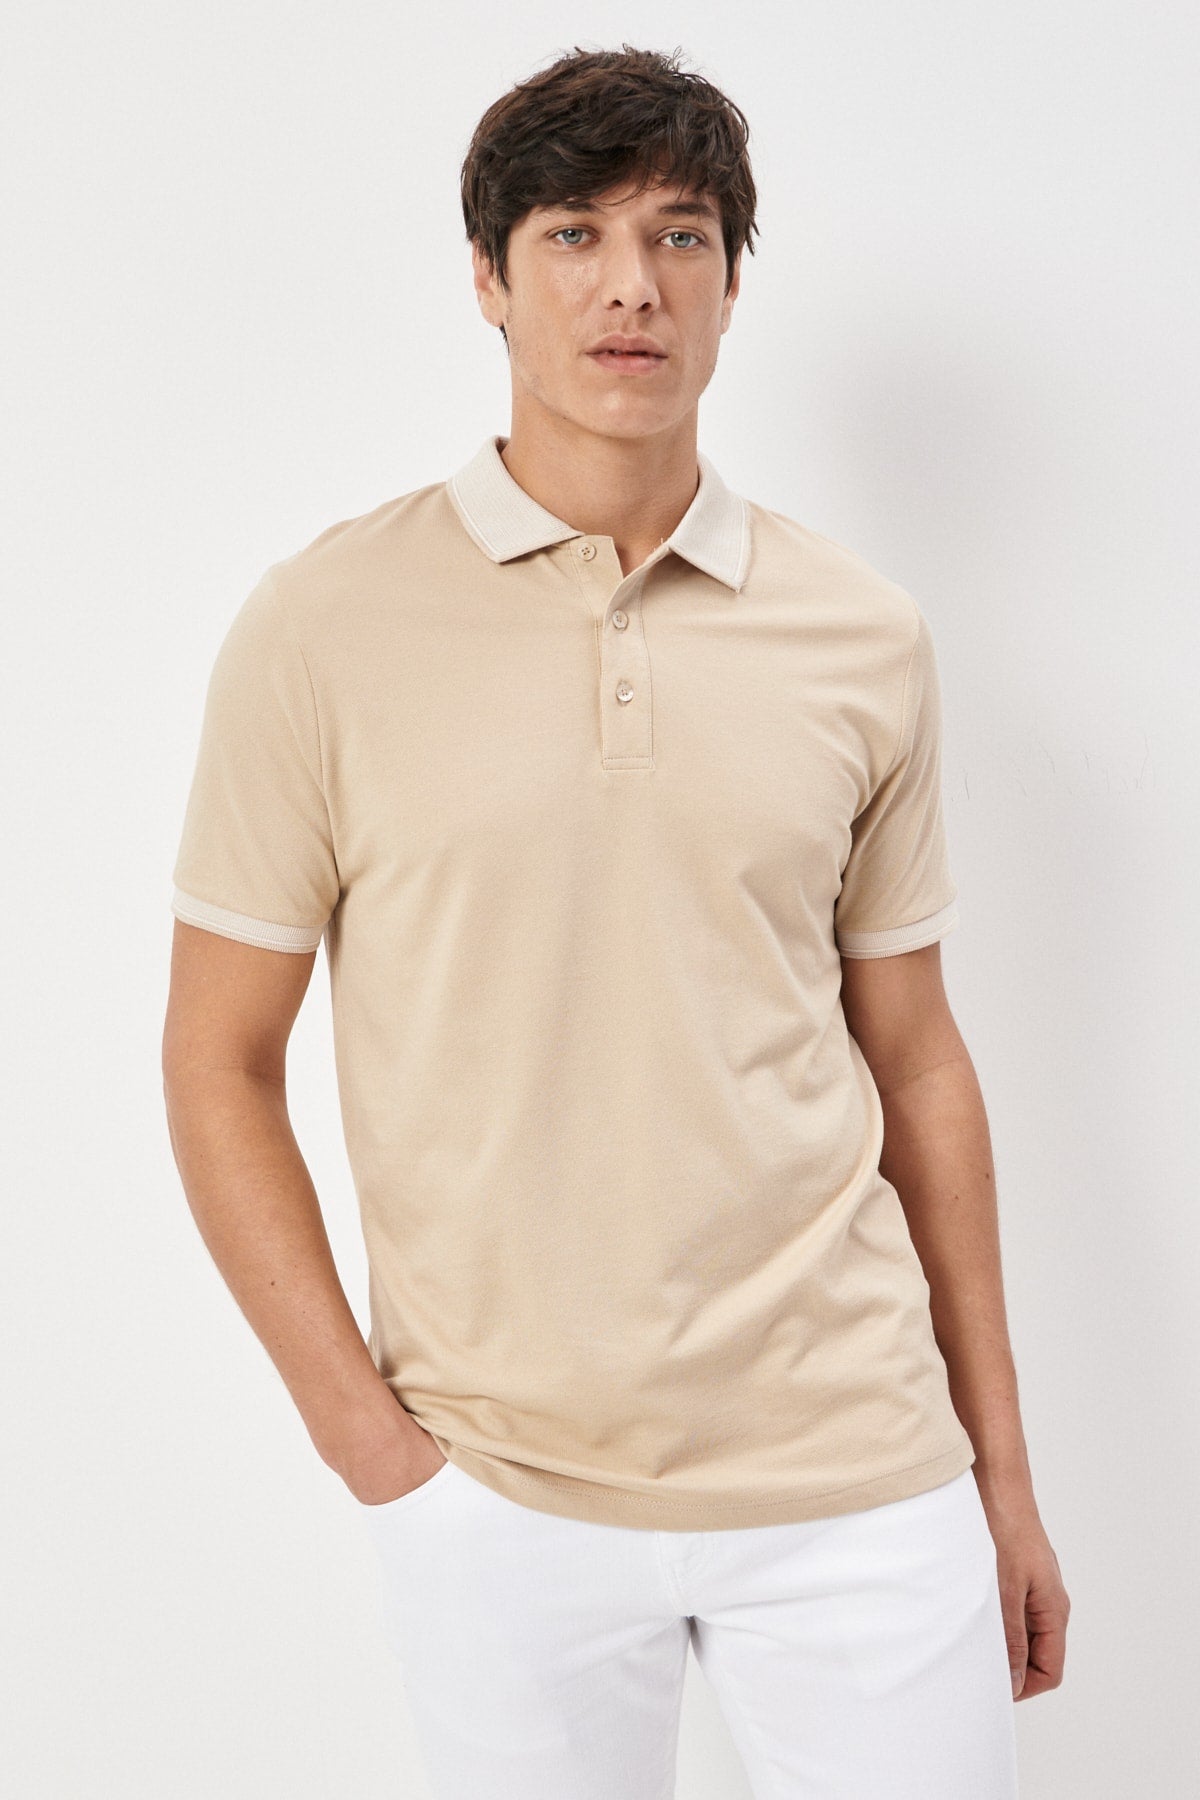 Men's Non-Shrink Cotton Fabric Slim Fit Slim Fit Light-Beige Anti-Roll Polo Neck T-Shirt